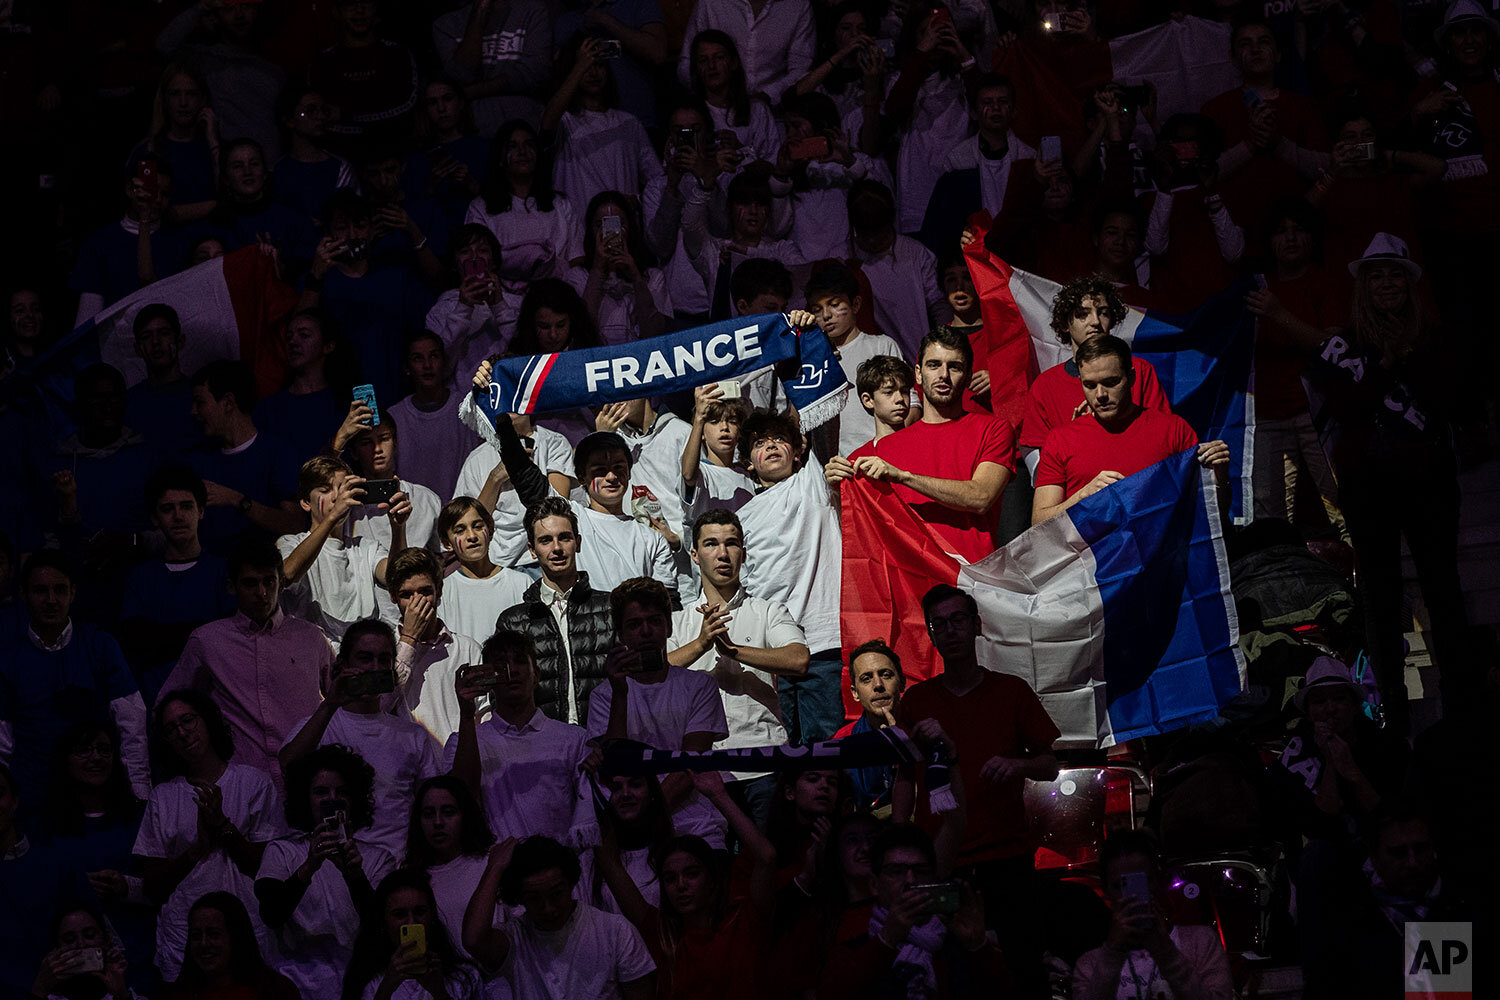  France supporters cheer during the Davis Cup tennis match between  Jo-Wilfried Tsonga and Serbia's Filip Krajinovic in Madrid, Spain, Thursday, Nov. 21, 2019. (AP Photo/Bernat Armangue) 